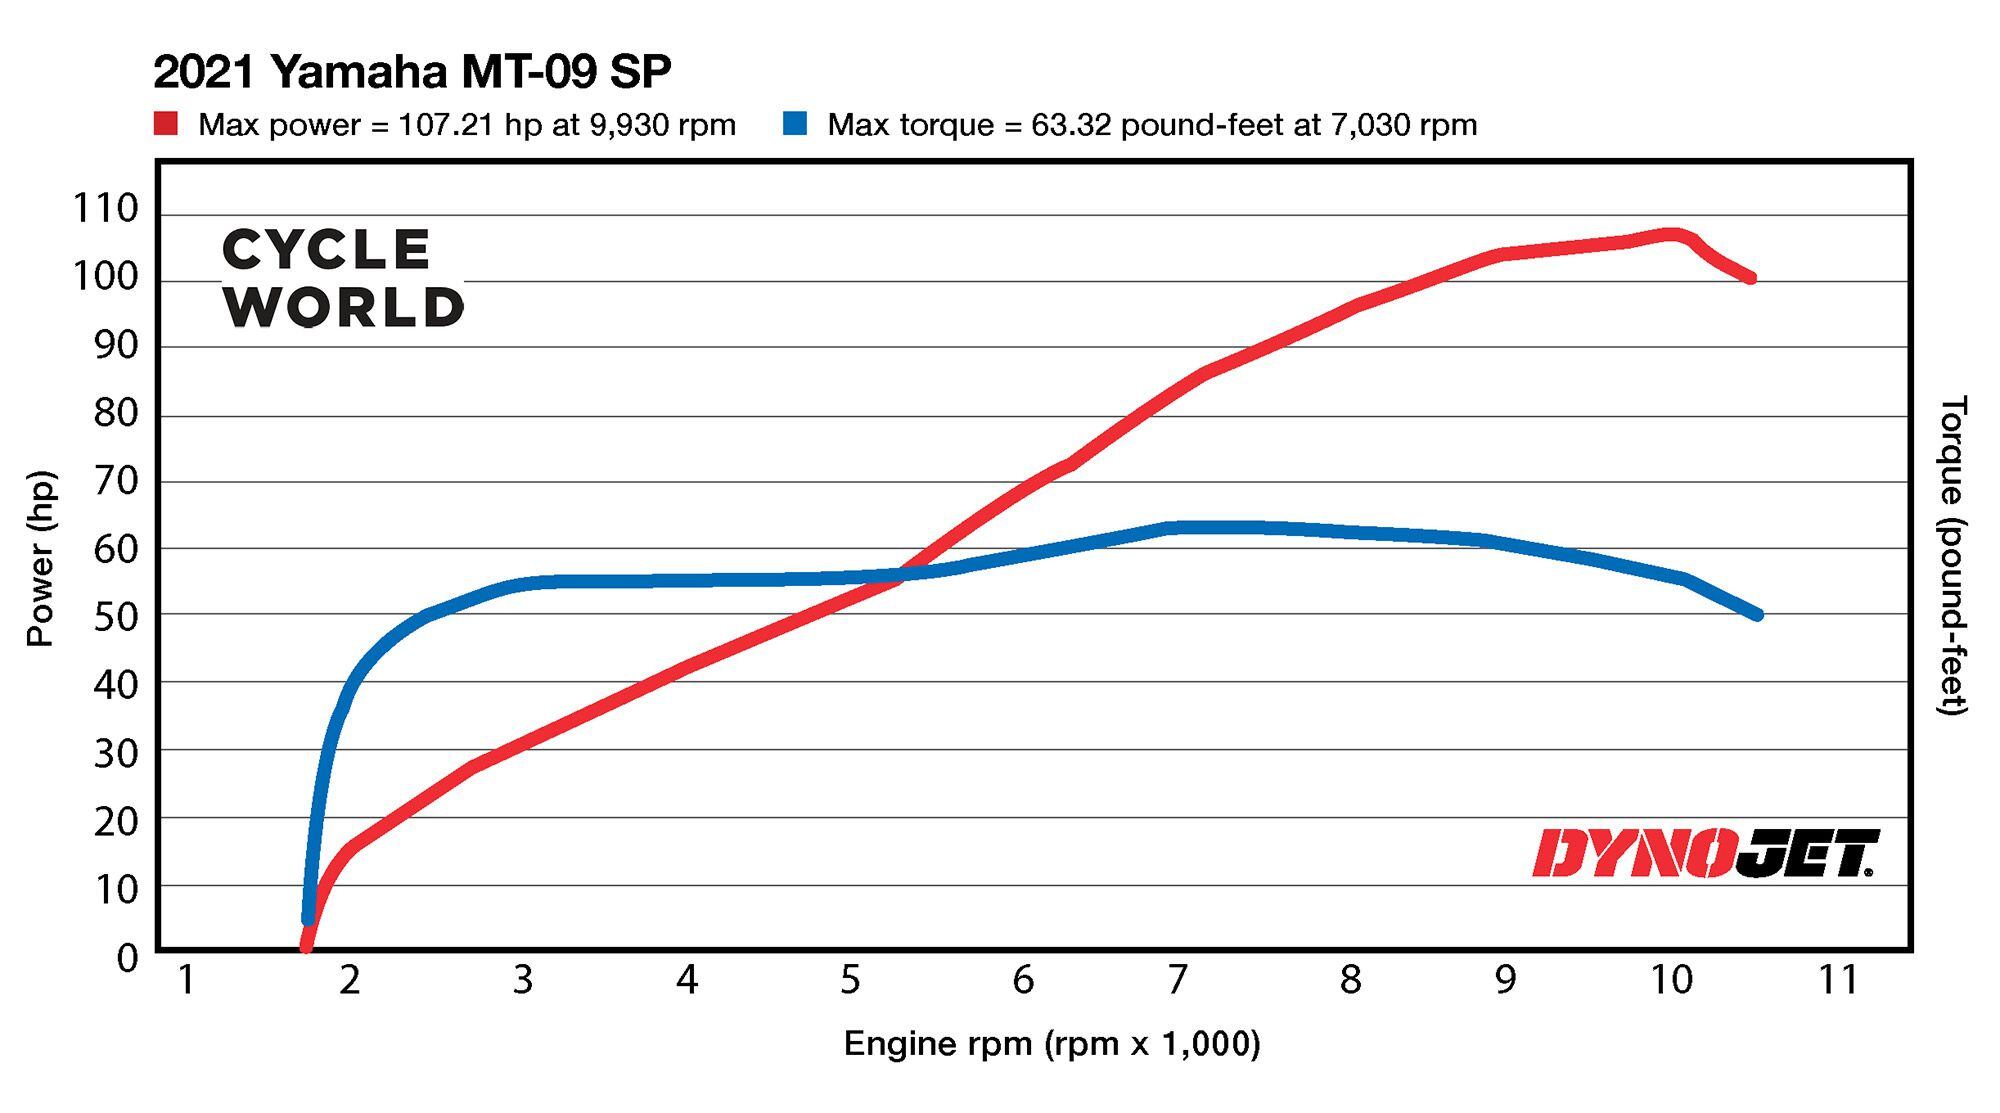 Horsepower and torque figures on the 2021 Yamaha MT-09 SP.